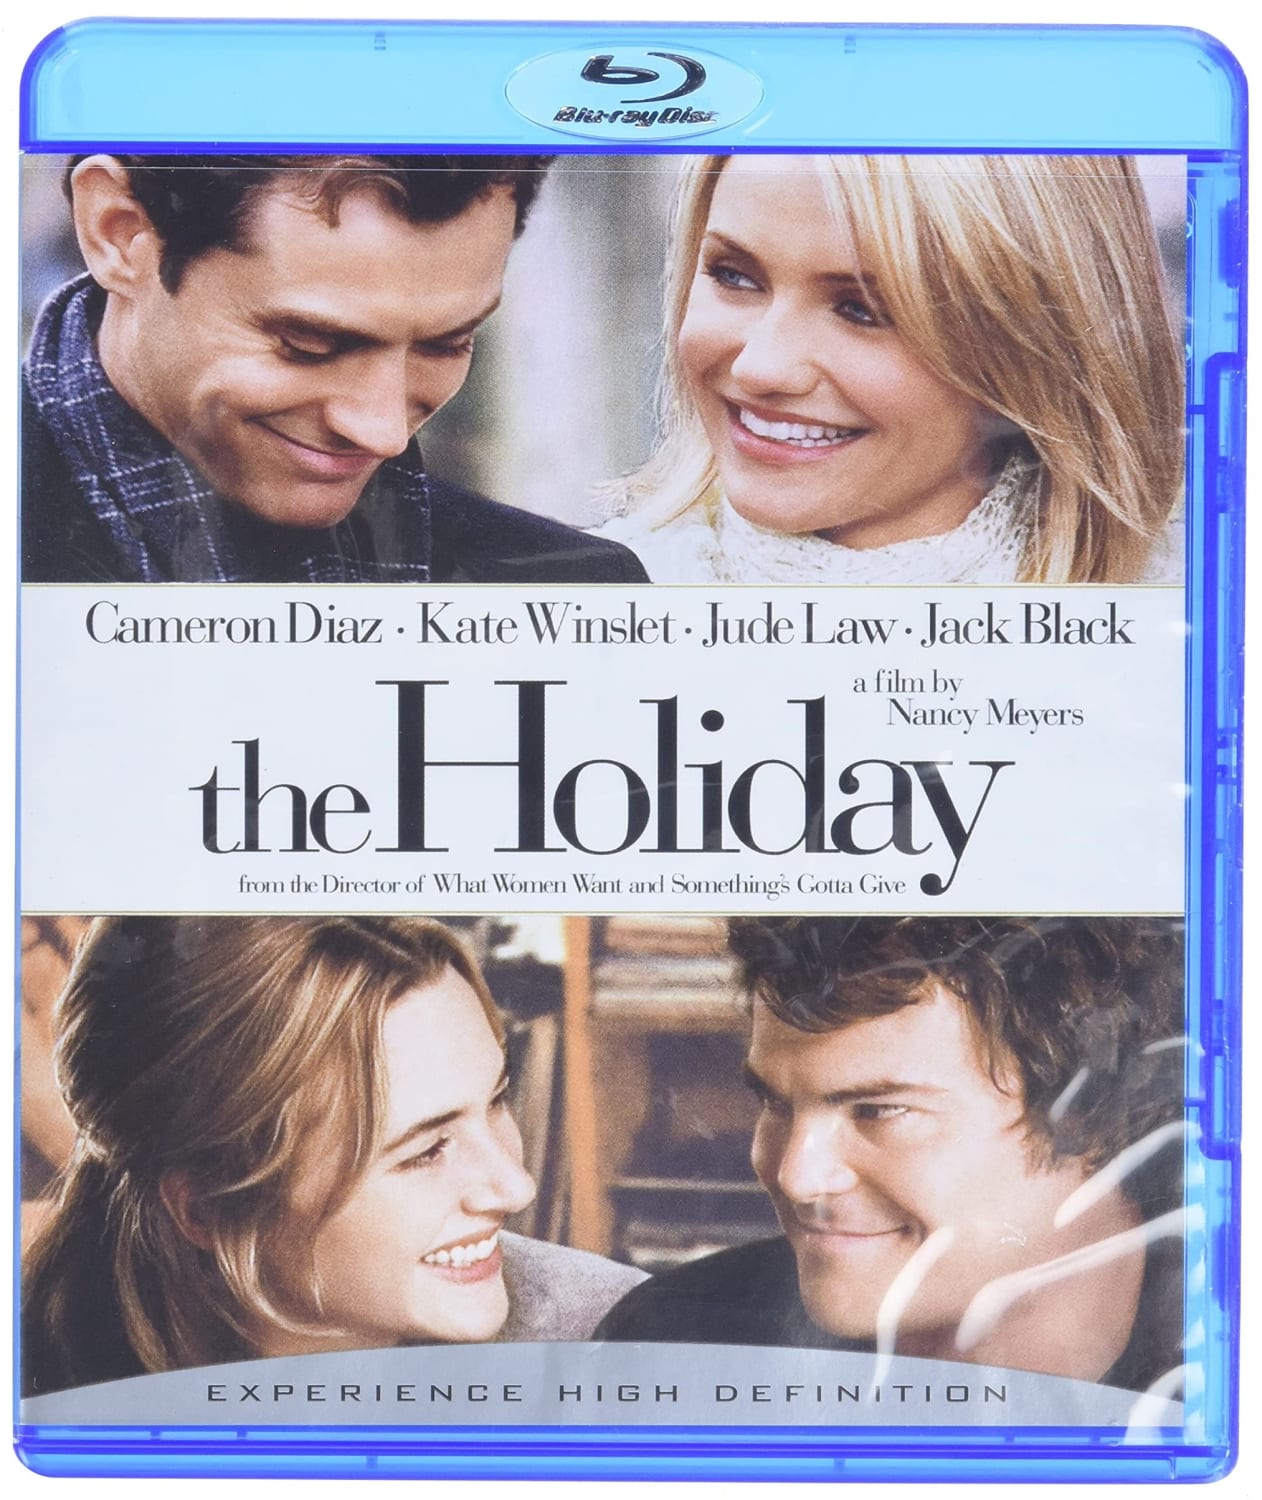 The Holiday (Blu-ray) on MovieShack